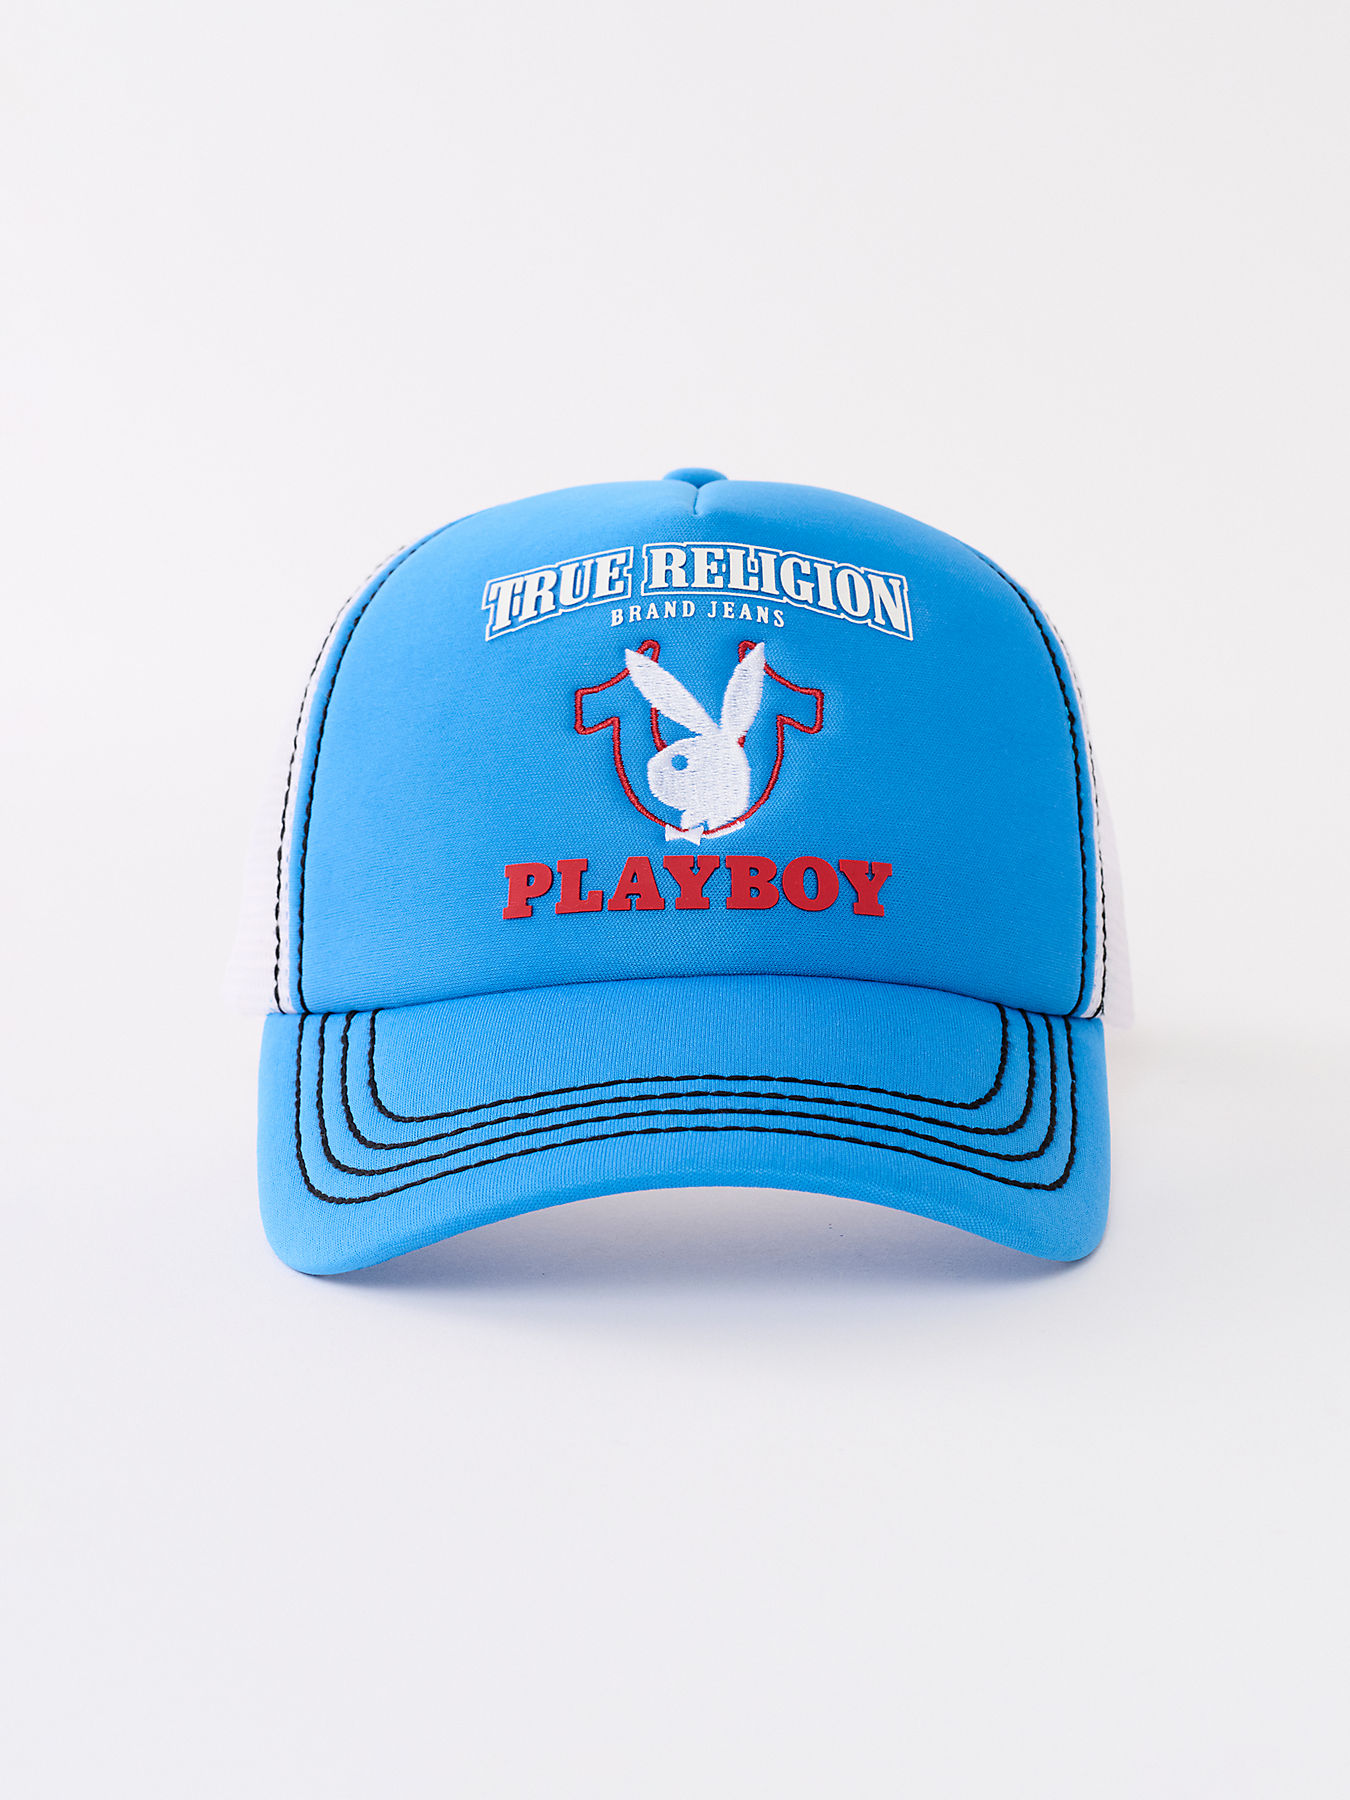 PLAYBOY X TRUE RELIGION TRUCKER HAT